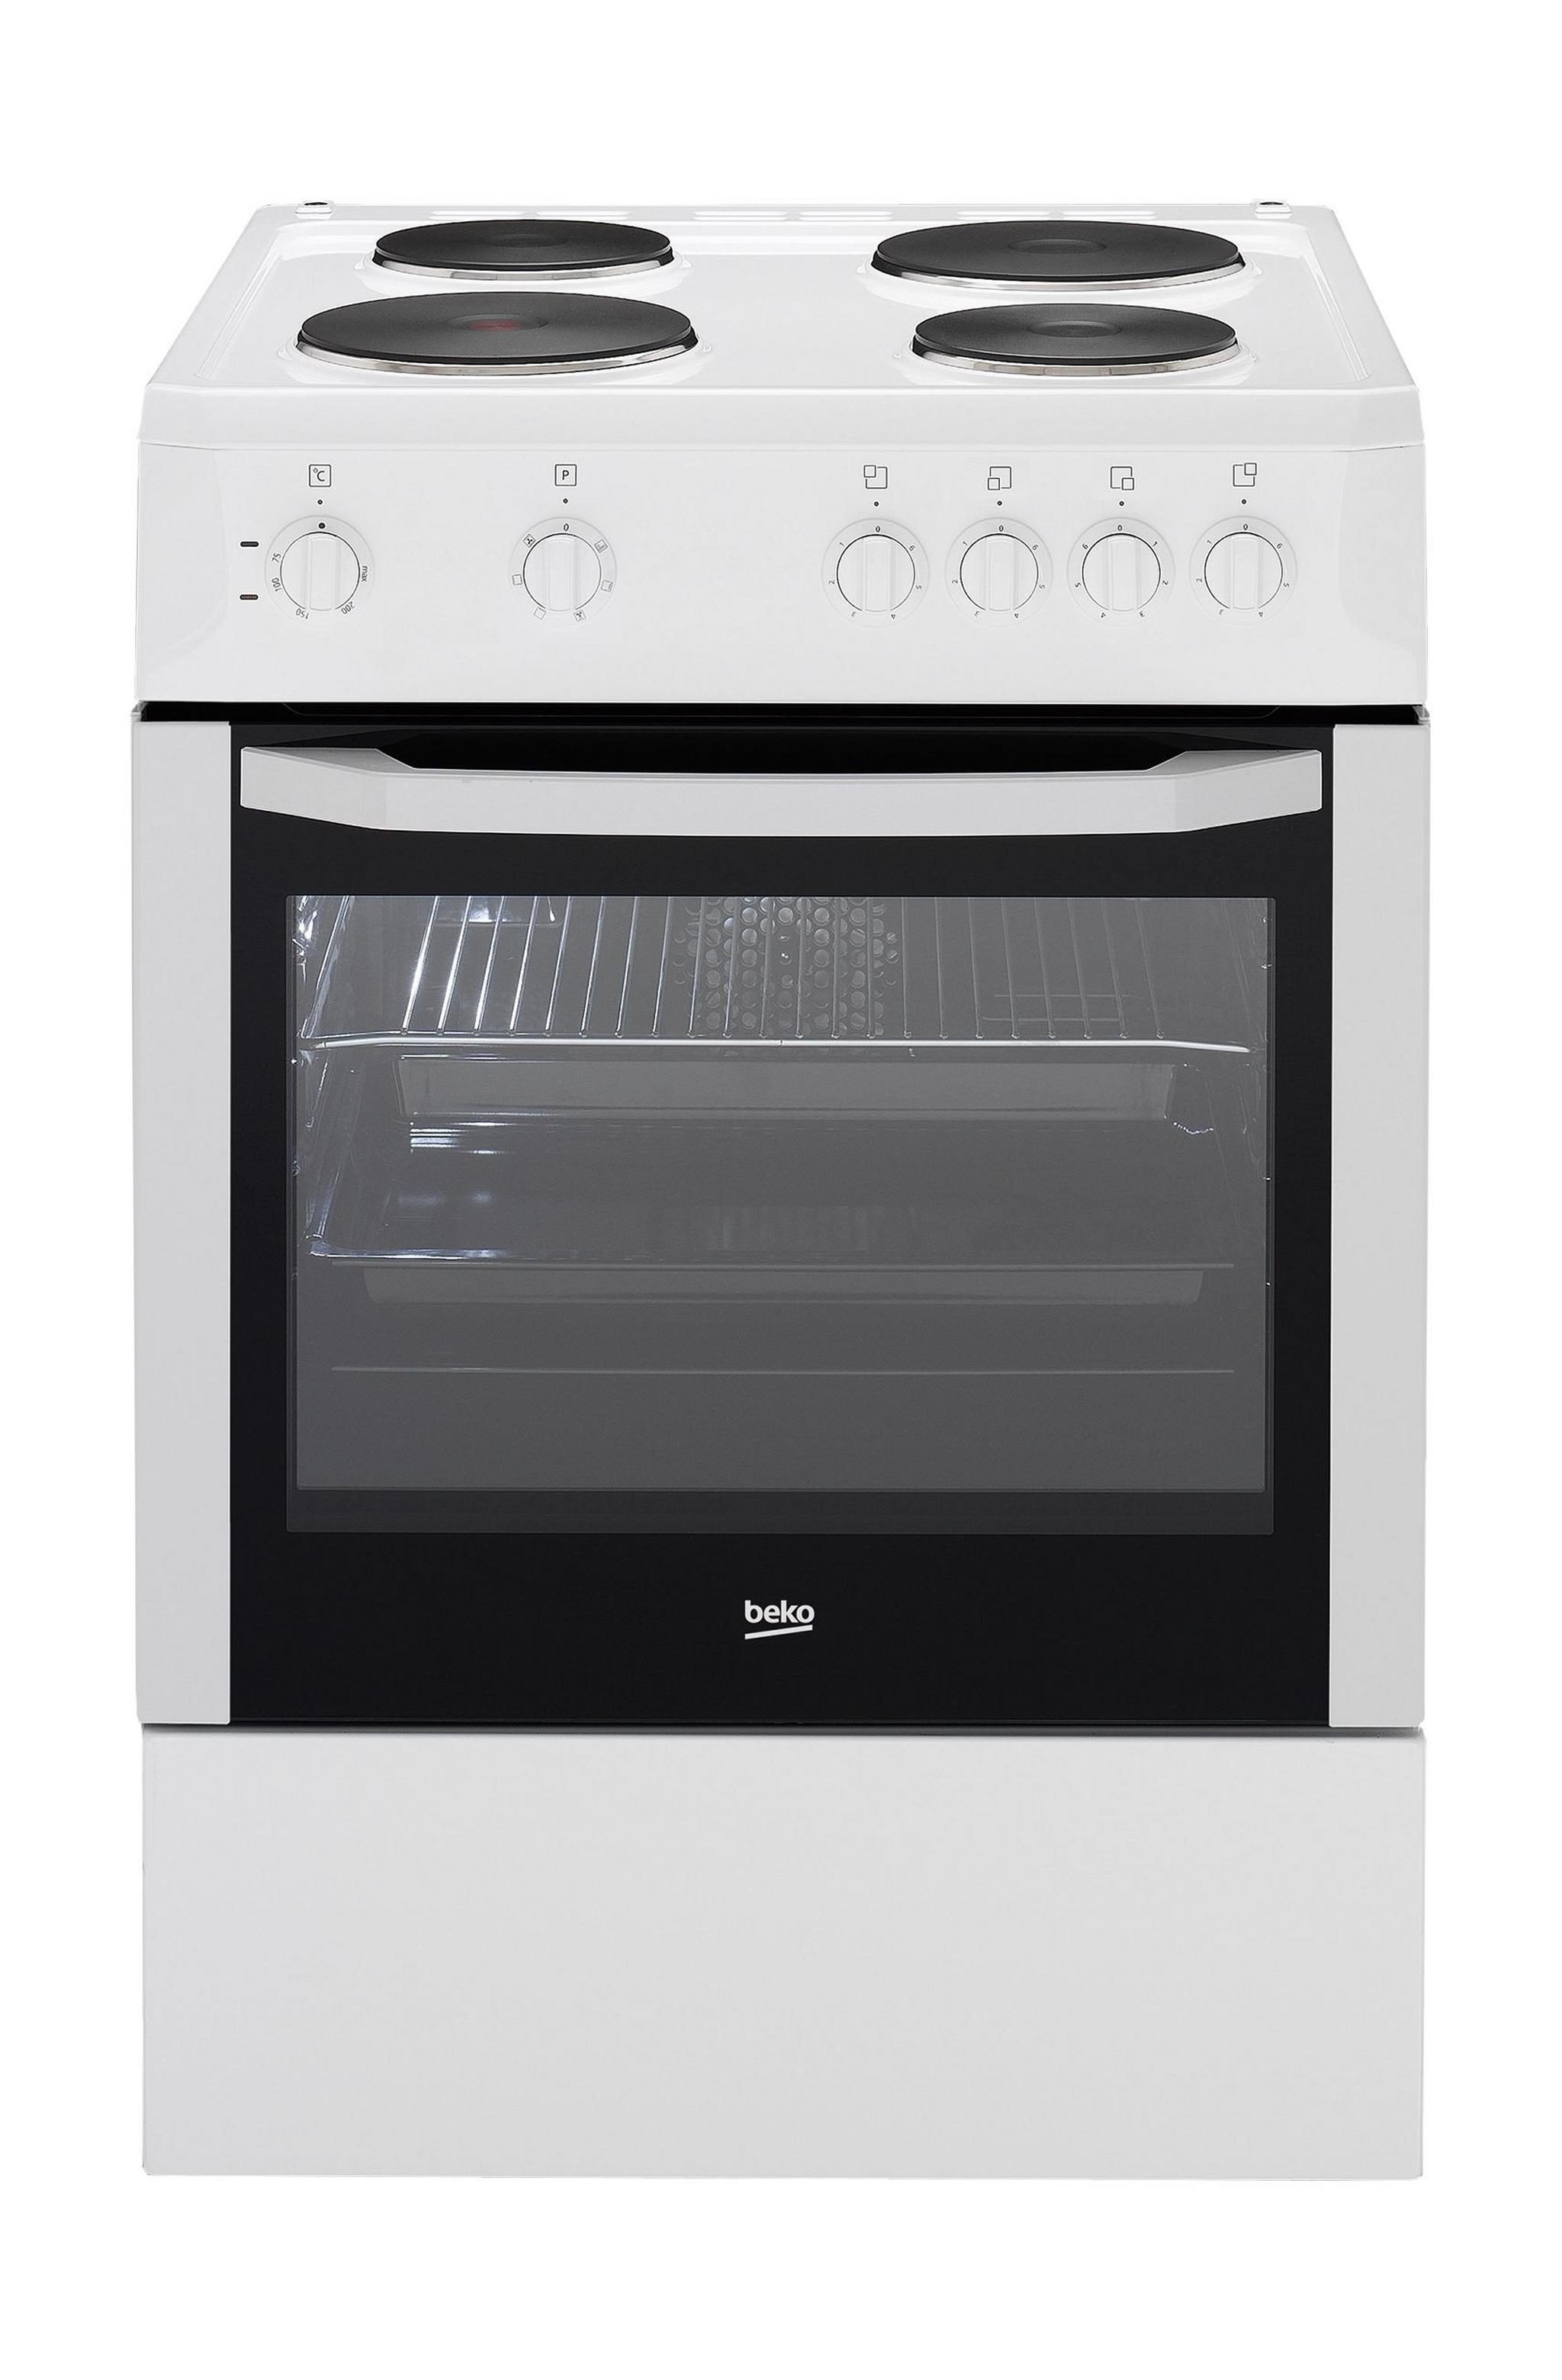 Beko 4-Burner 60x60 Electric Cooker (CSS 66002 W) - White